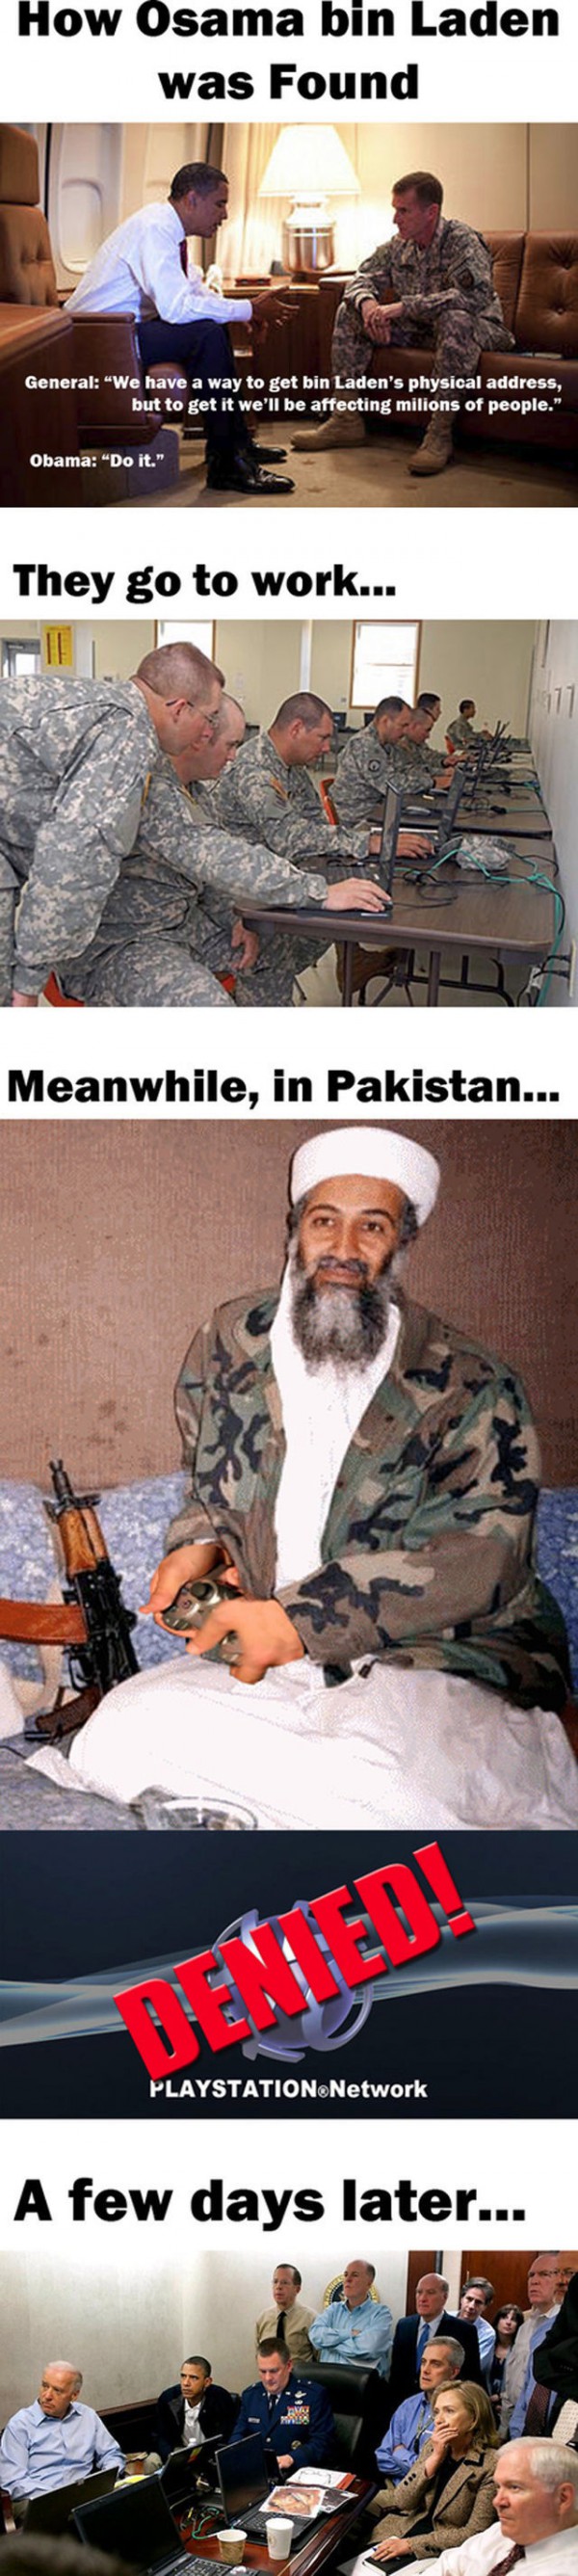 Osama gefasst